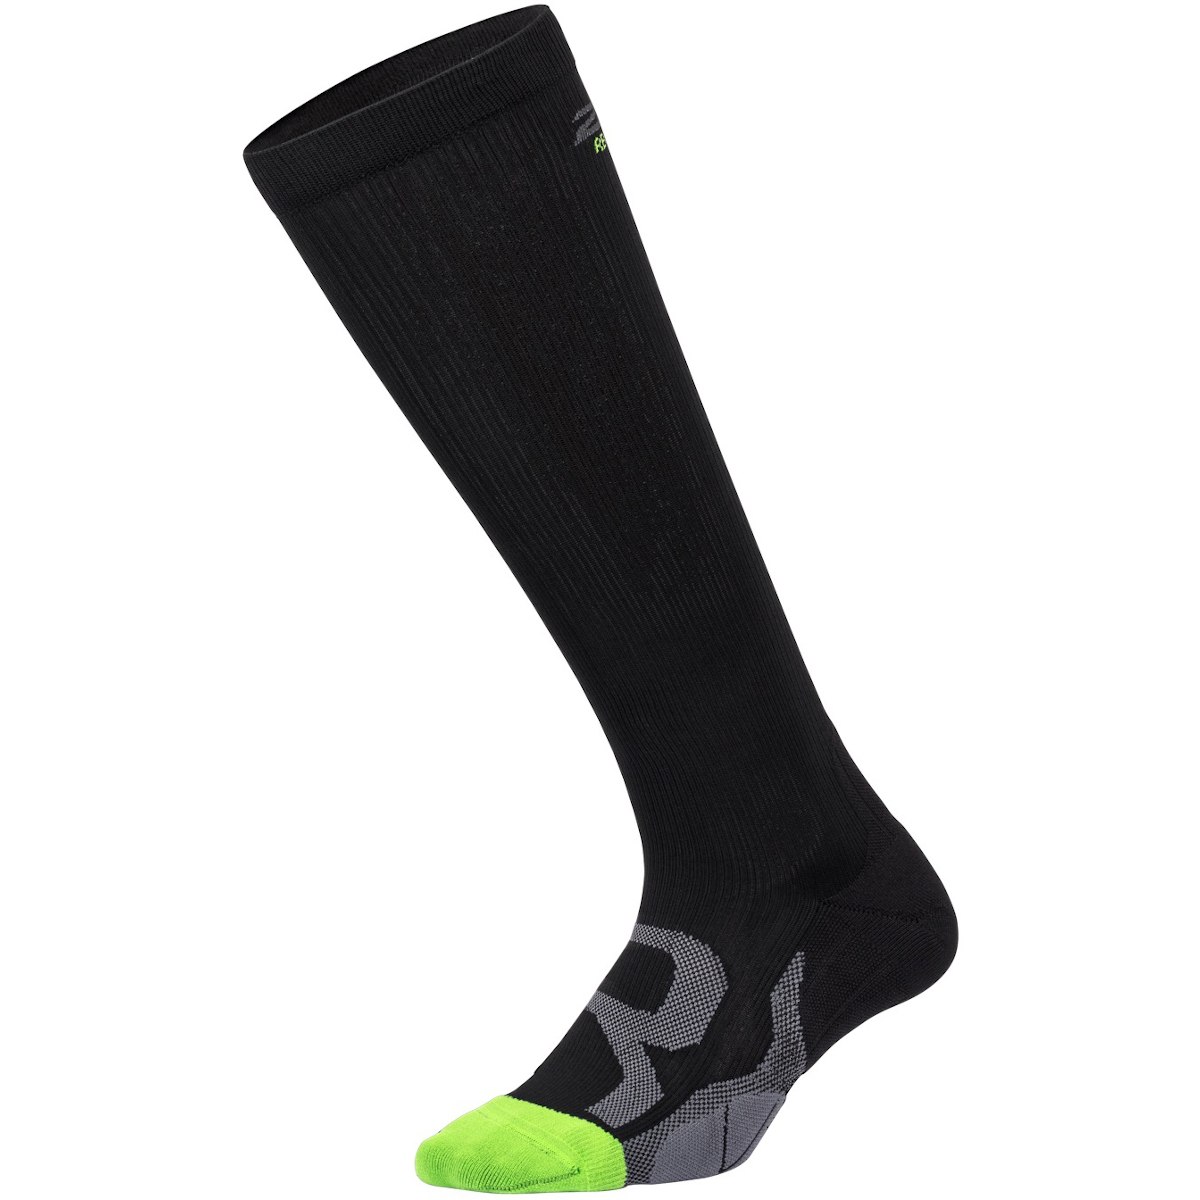 Produktbild von 2XU Compression Socks for Recovery - weit - black